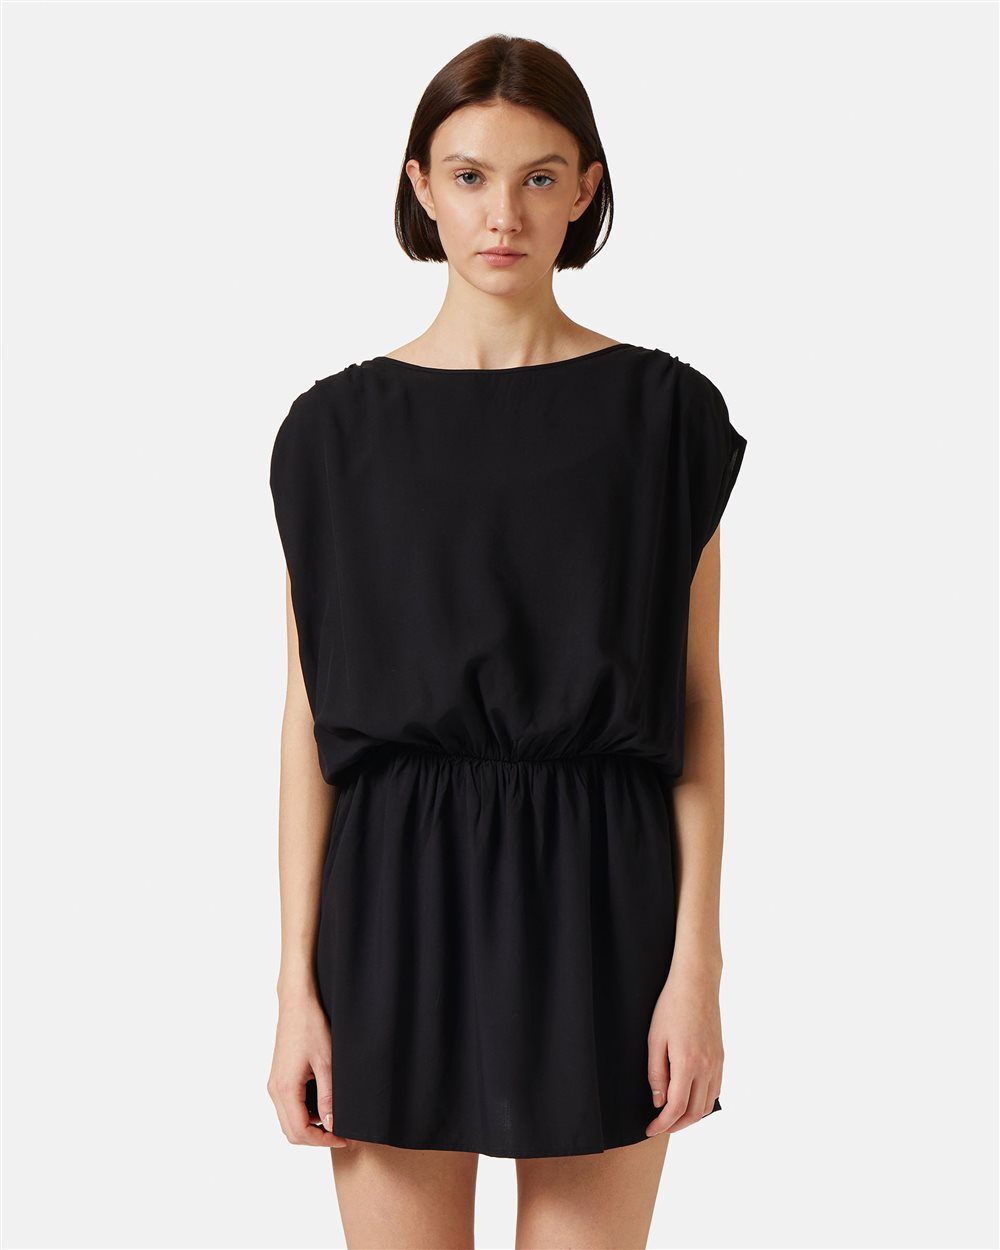 Black dress with logo - Iceberg - Official Website